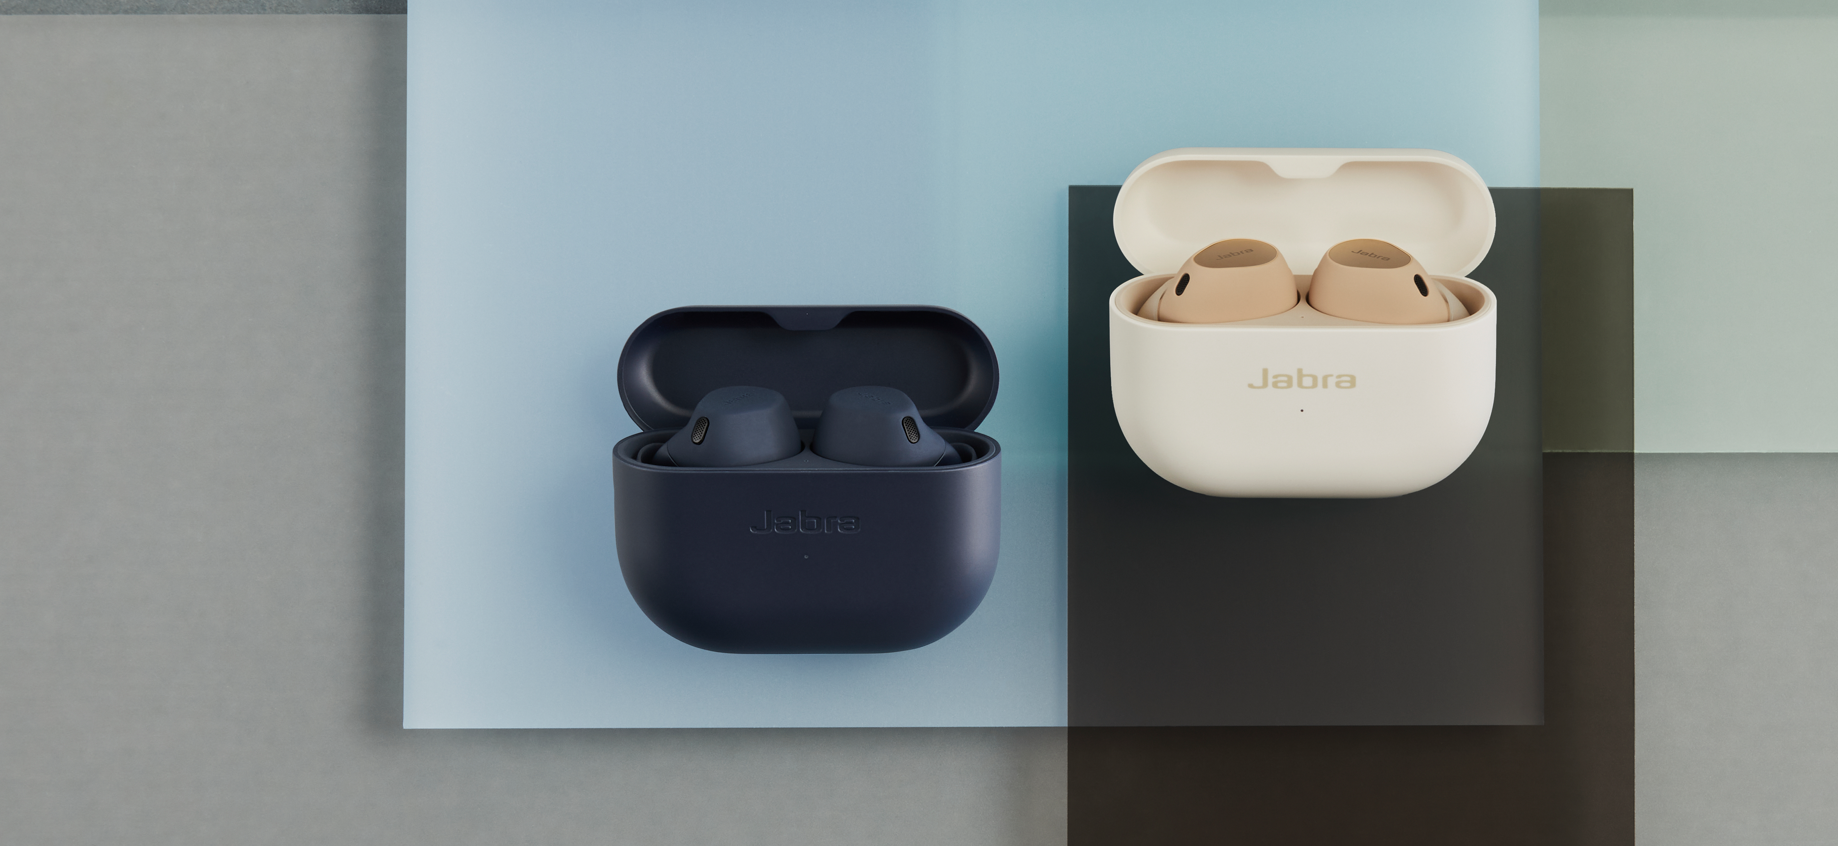 Jabra Releases Updates for Elite Wireless Earbuds